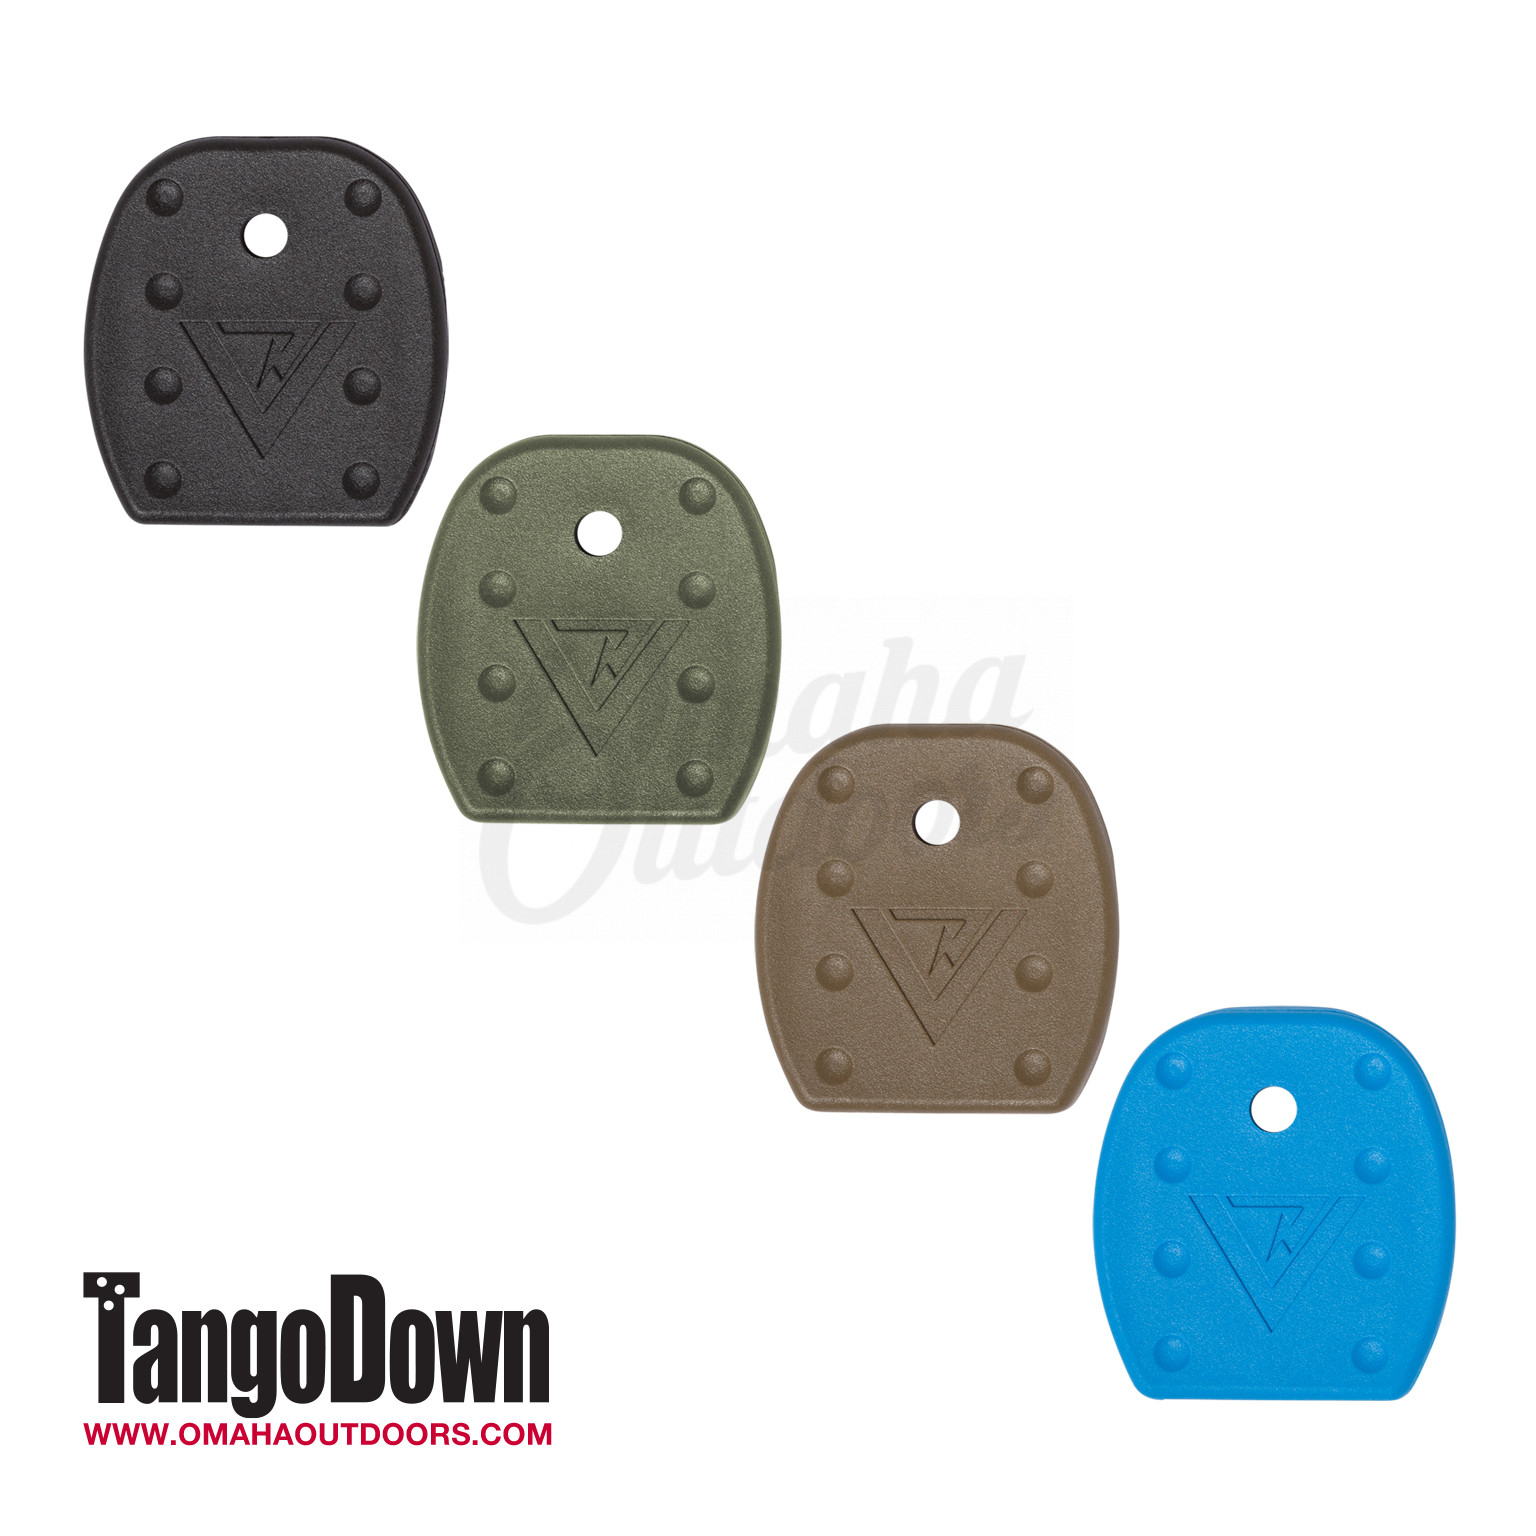 Tangodown Vickers Tactical Magazine Floor Plate 5 Pack Glock 17 19